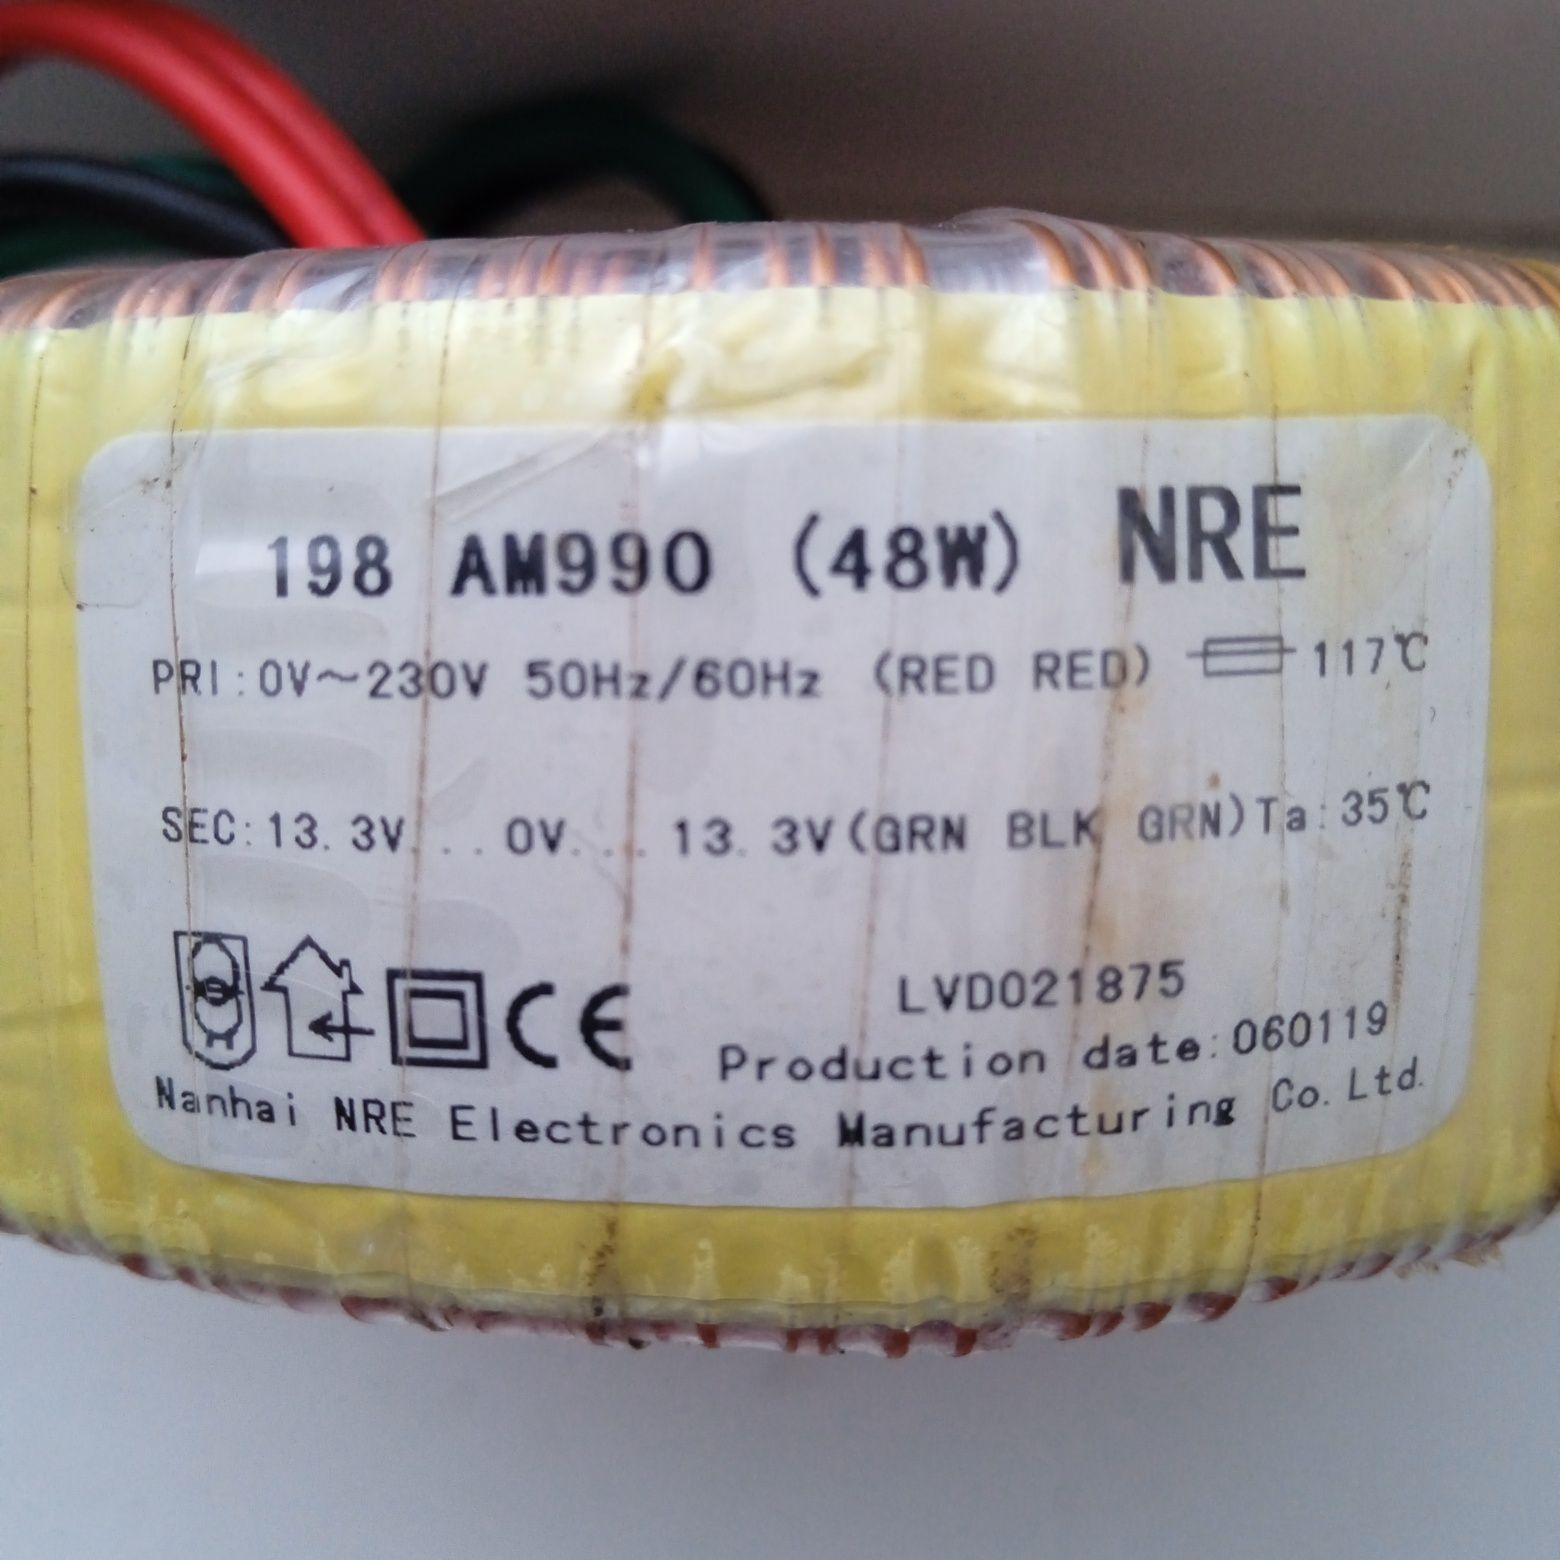 Продам трансформатор 198 AM990 (48W) NRE

PRI: OV-230V 50Hz/60Hz (RED